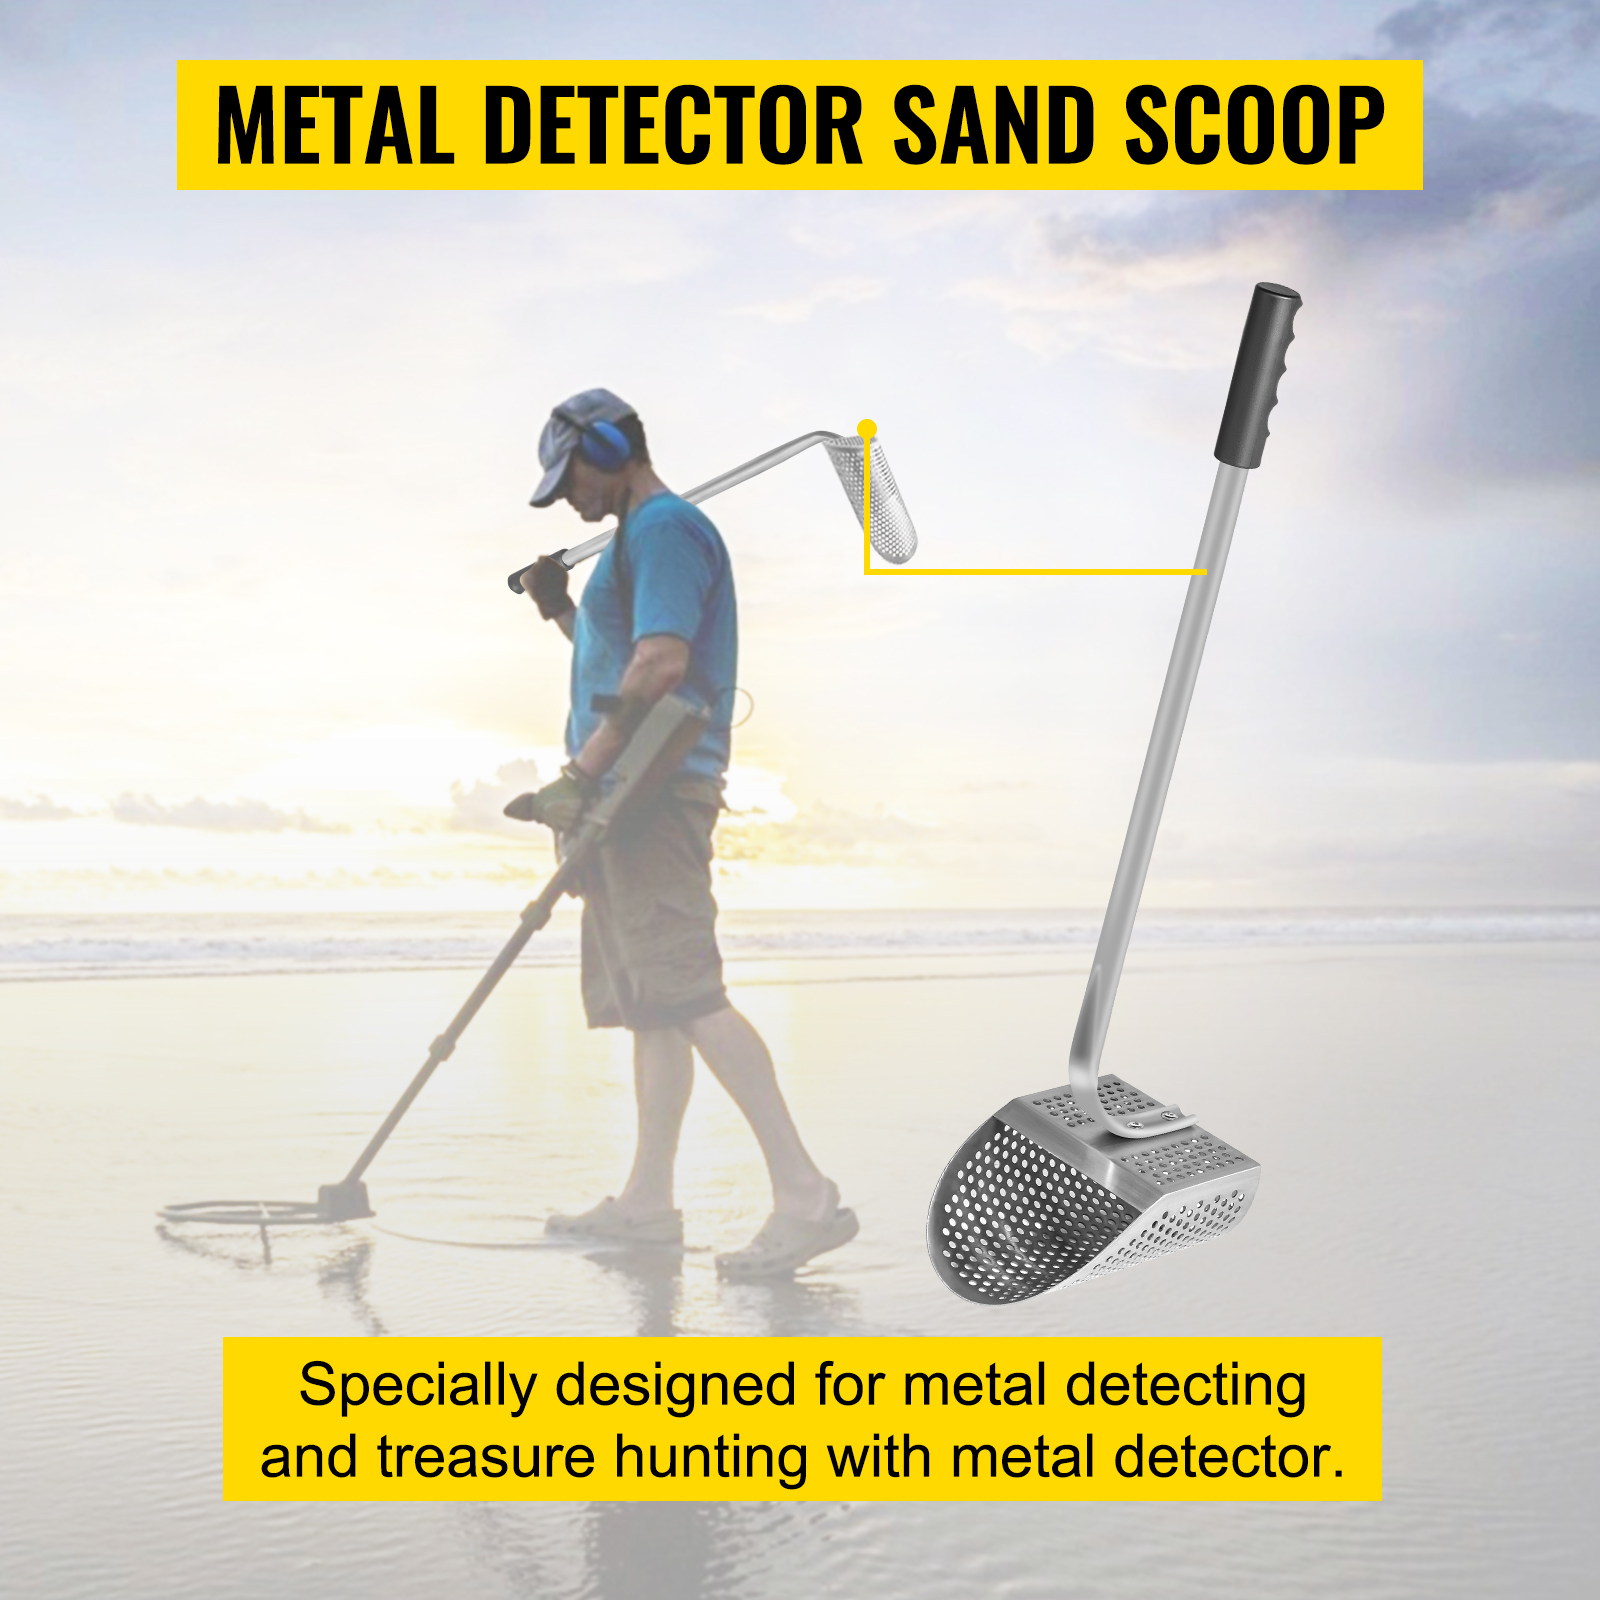 VEVOR Metal Detector Sand Scoop, Stainless Steel Metal Detecting Beach  Scoop Scoops, 10 MM Hole Beach Metal Detector Scoop Shovel, w/ Stainless  Steel